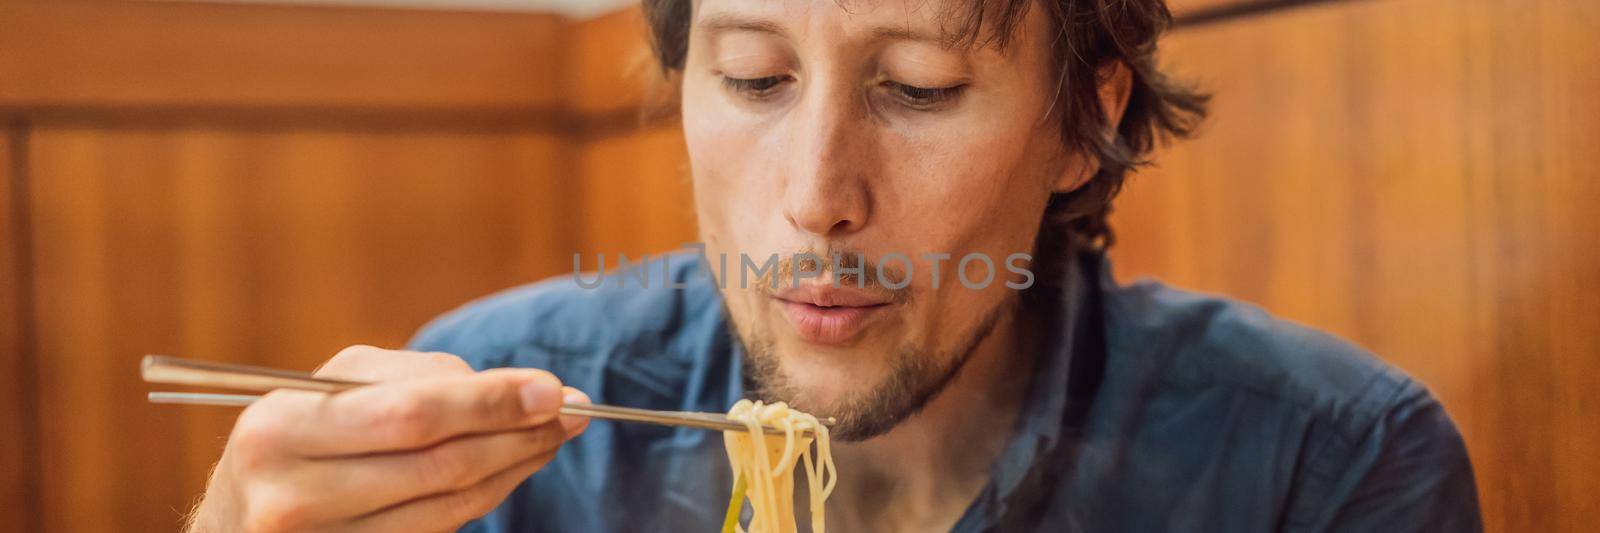 Male tourist eating Korean noodles in a Korean cafe. Travel Korea Concept. BANNER, LONG FORMAT